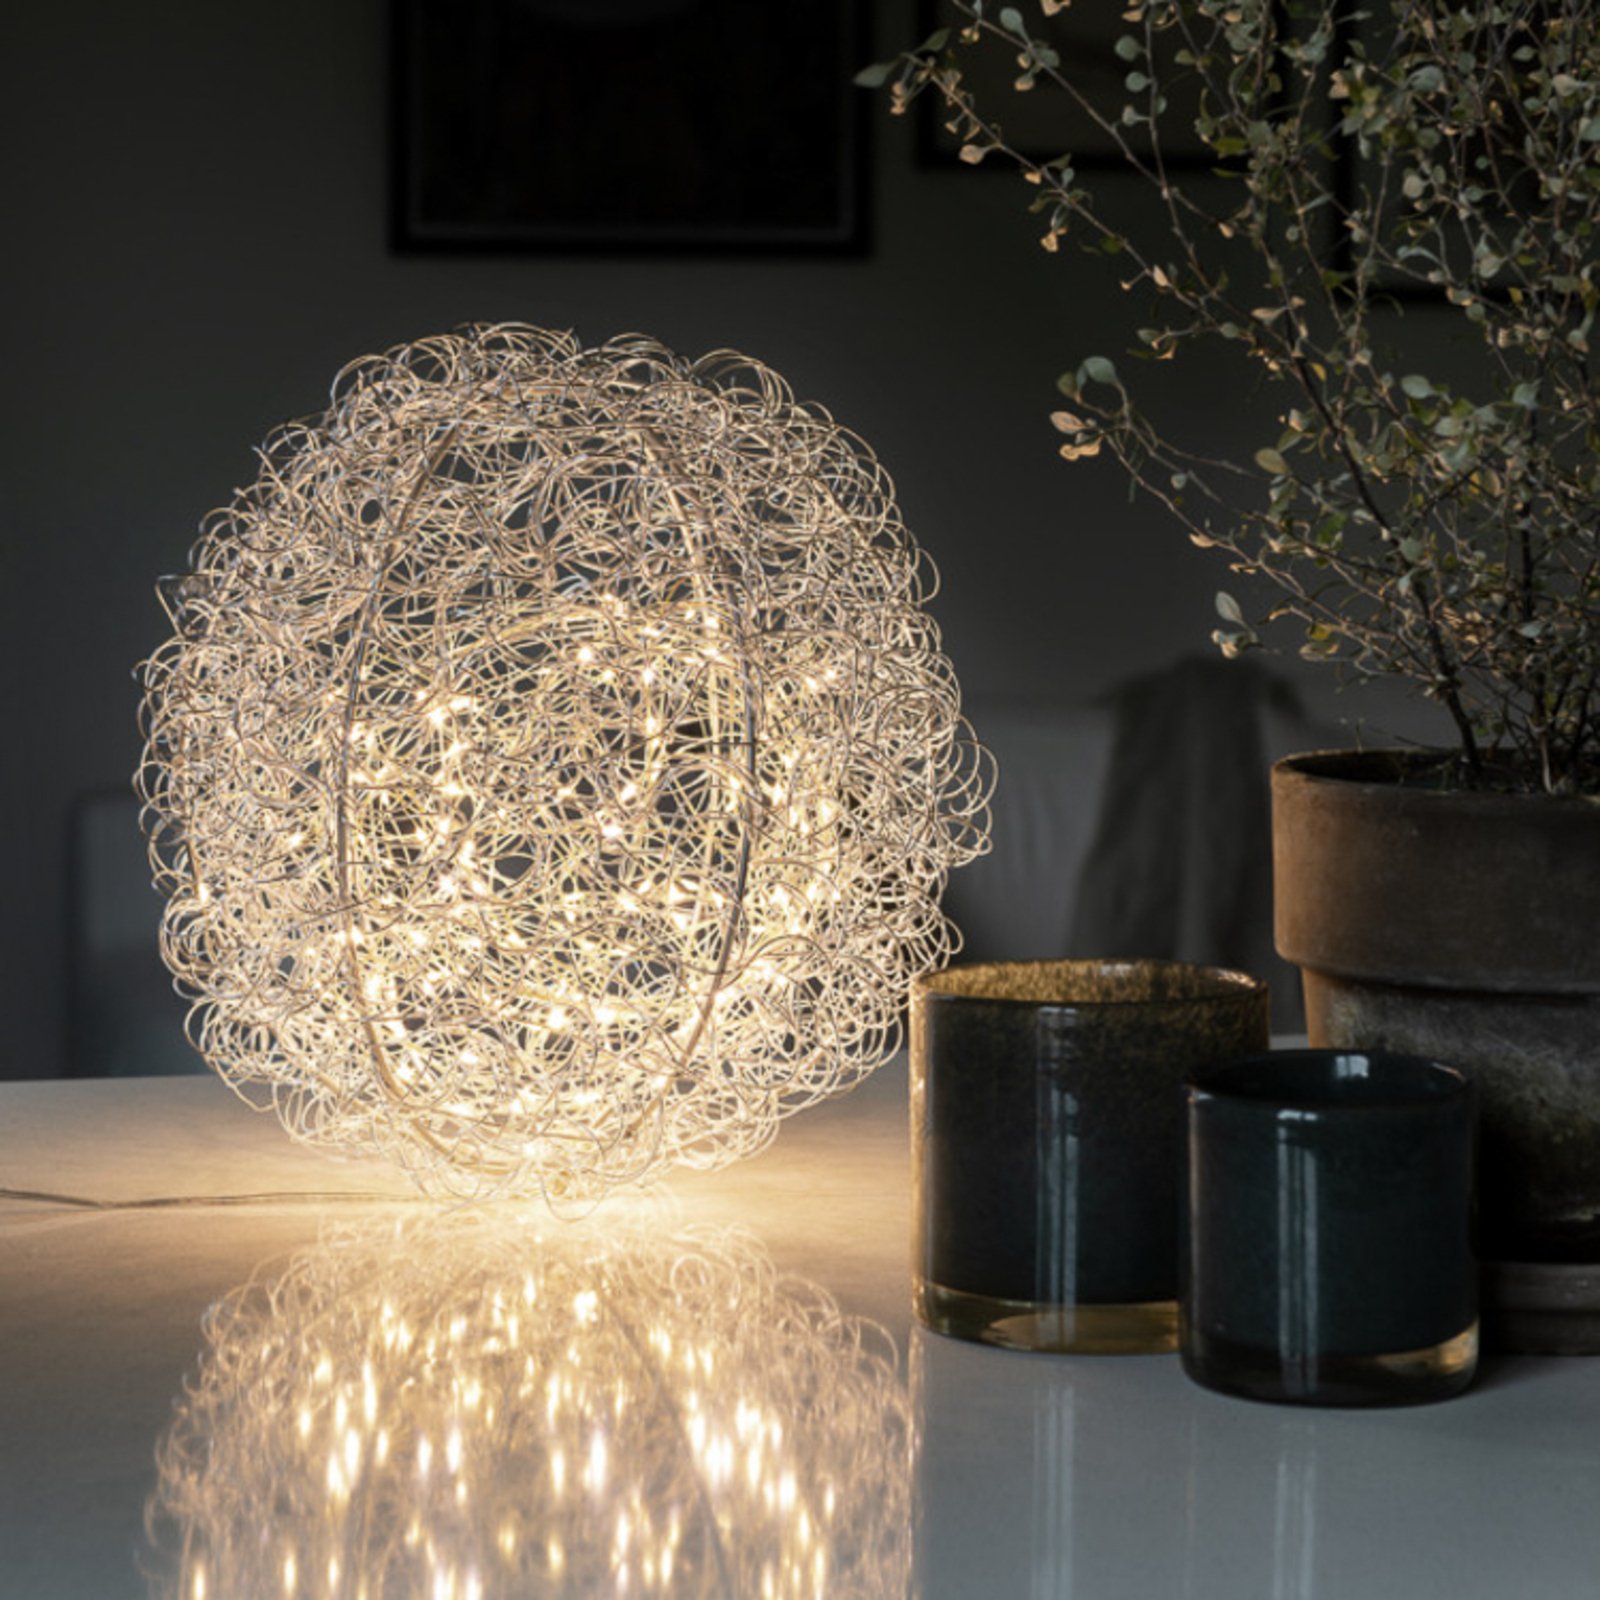 Bola de arame luminoso decorativa LED, Ø 30cm, 160 LEDs